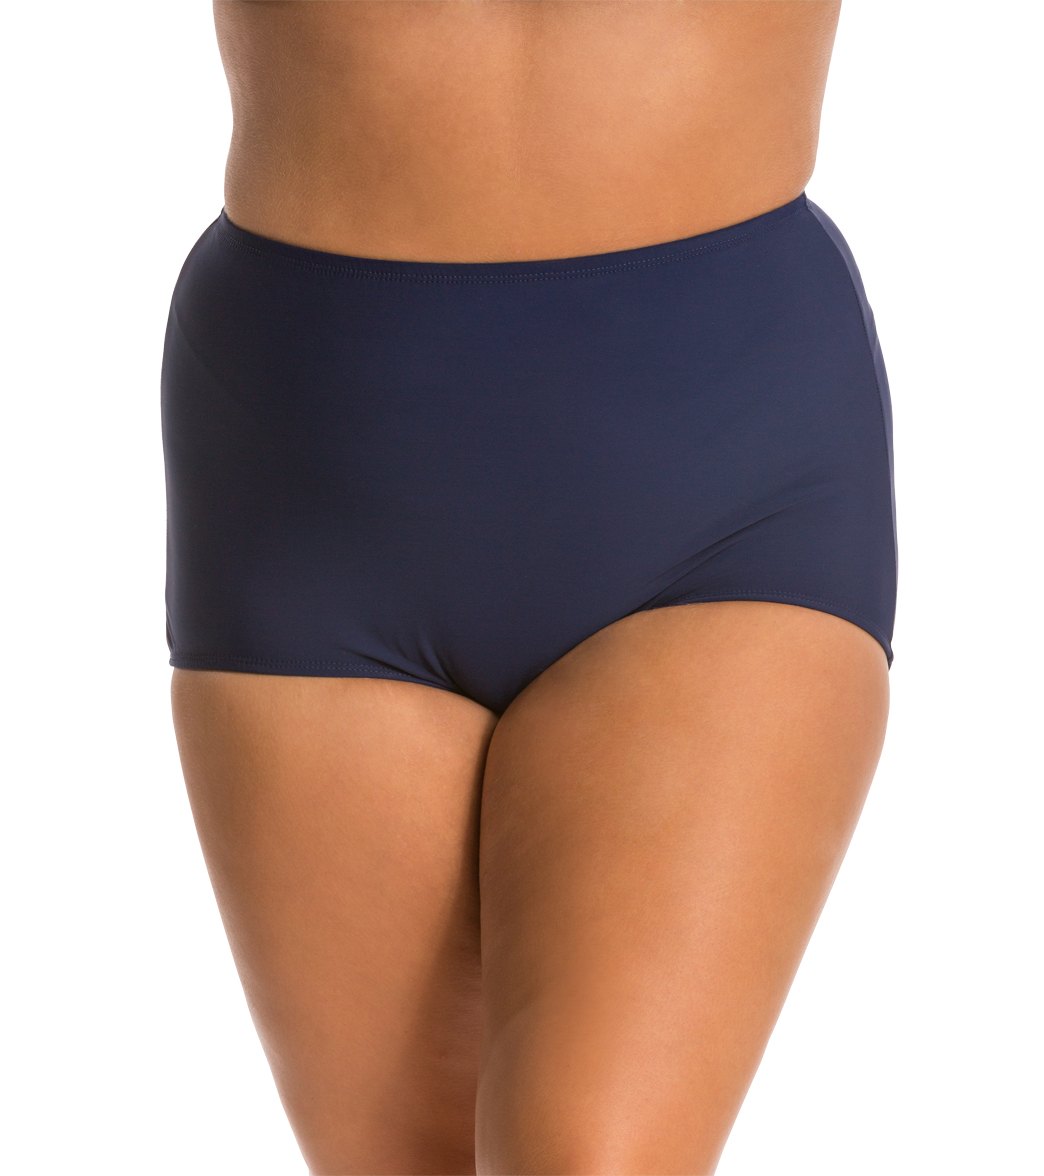 Topanga Plus Size Solid Conservative Brief Bikini Bottom - Navy 24W Nylon/Spandex - Swimoutlet.com